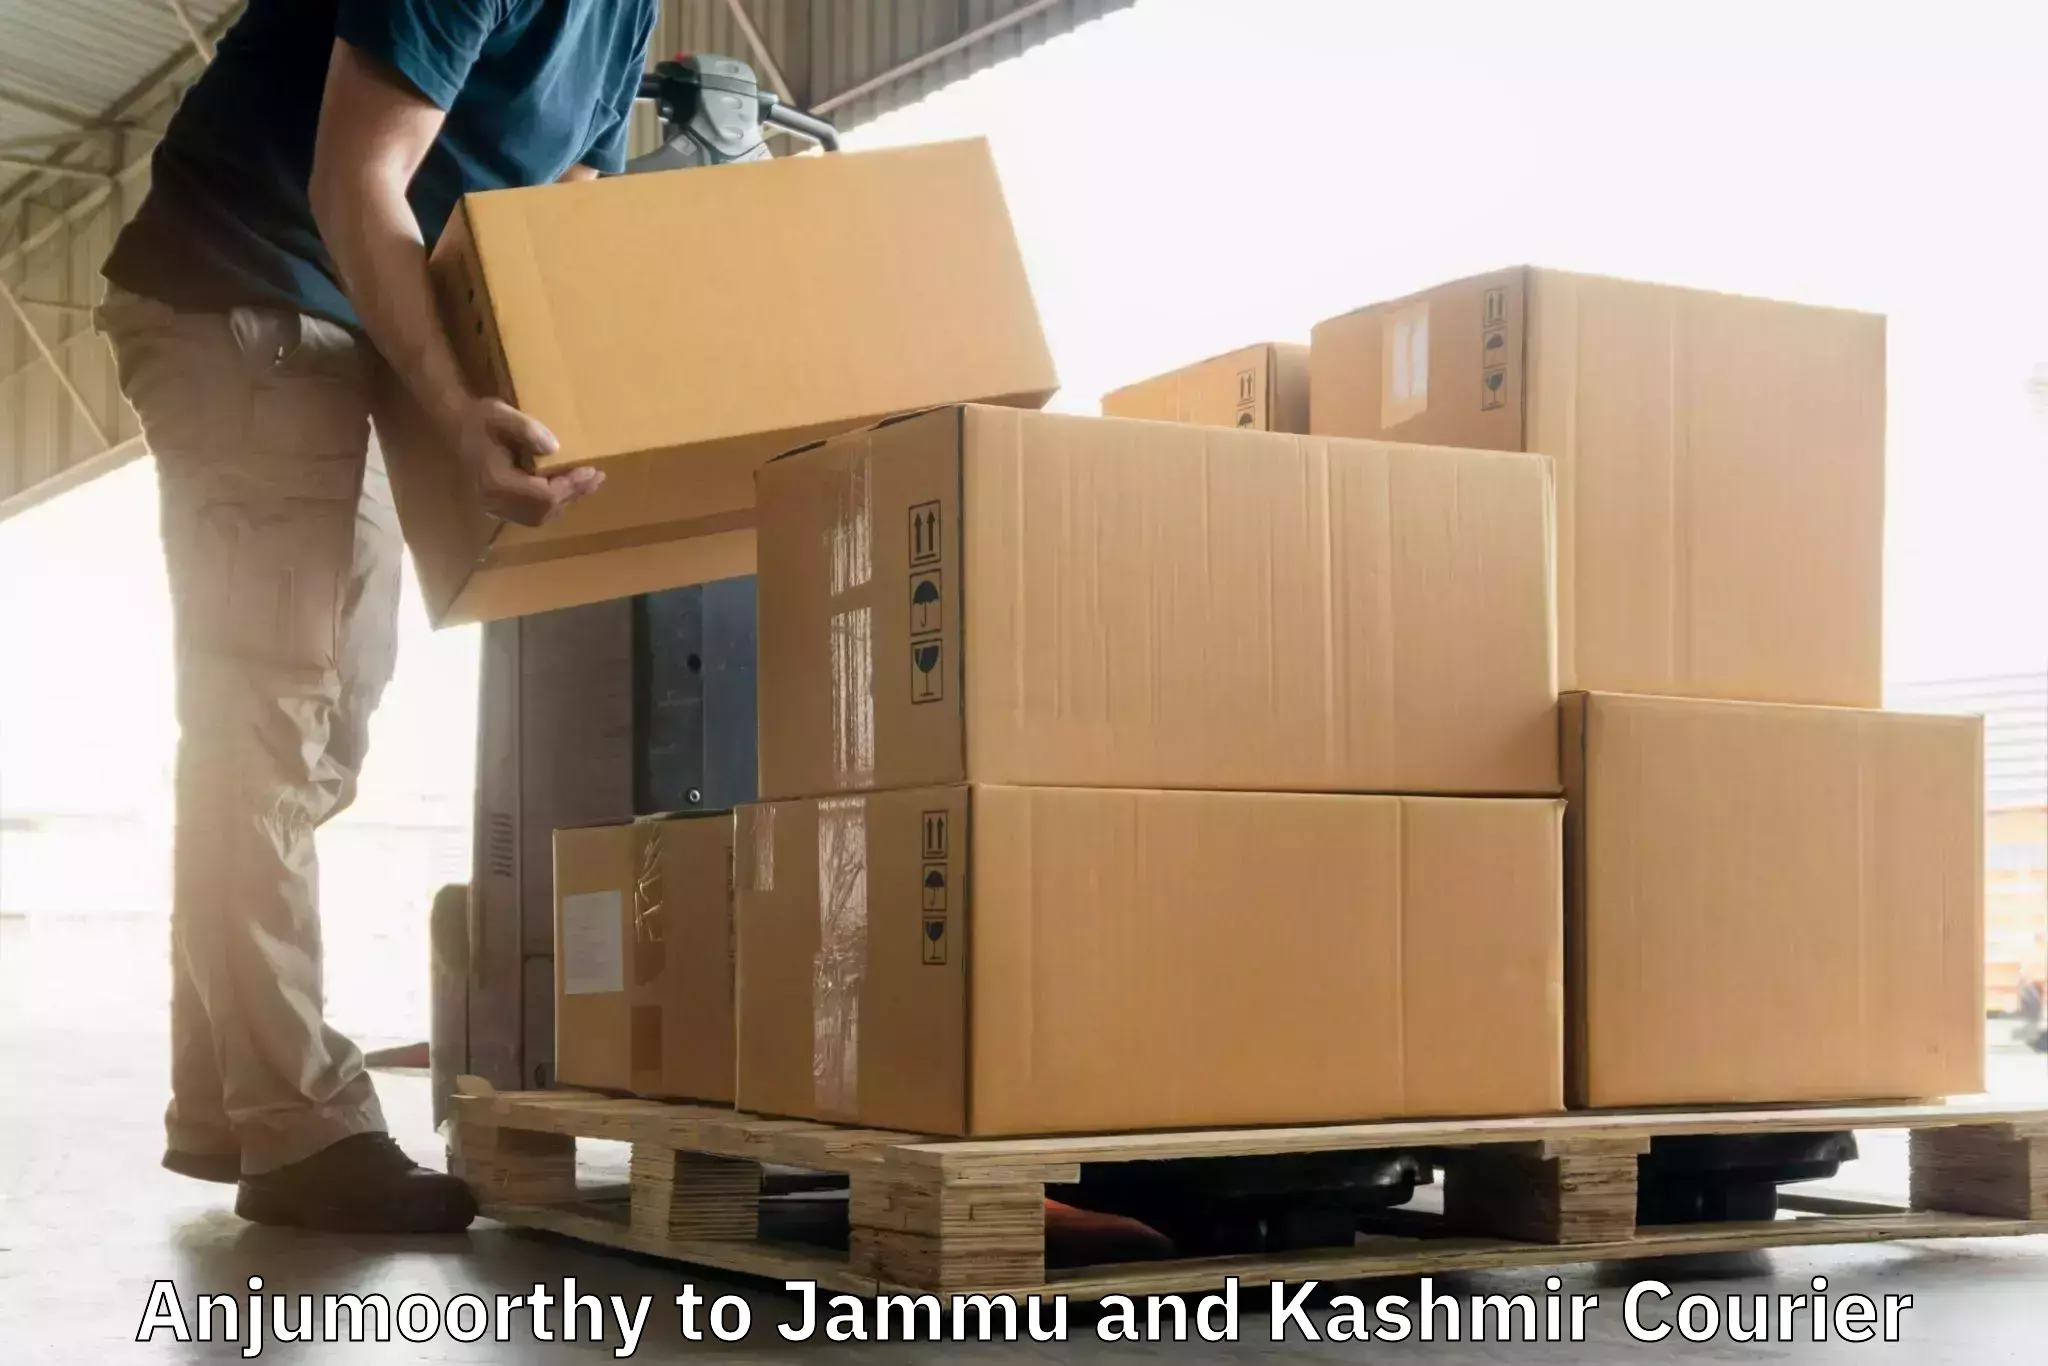 Global shipping networks Anjumoorthy to Jammu and Kashmir